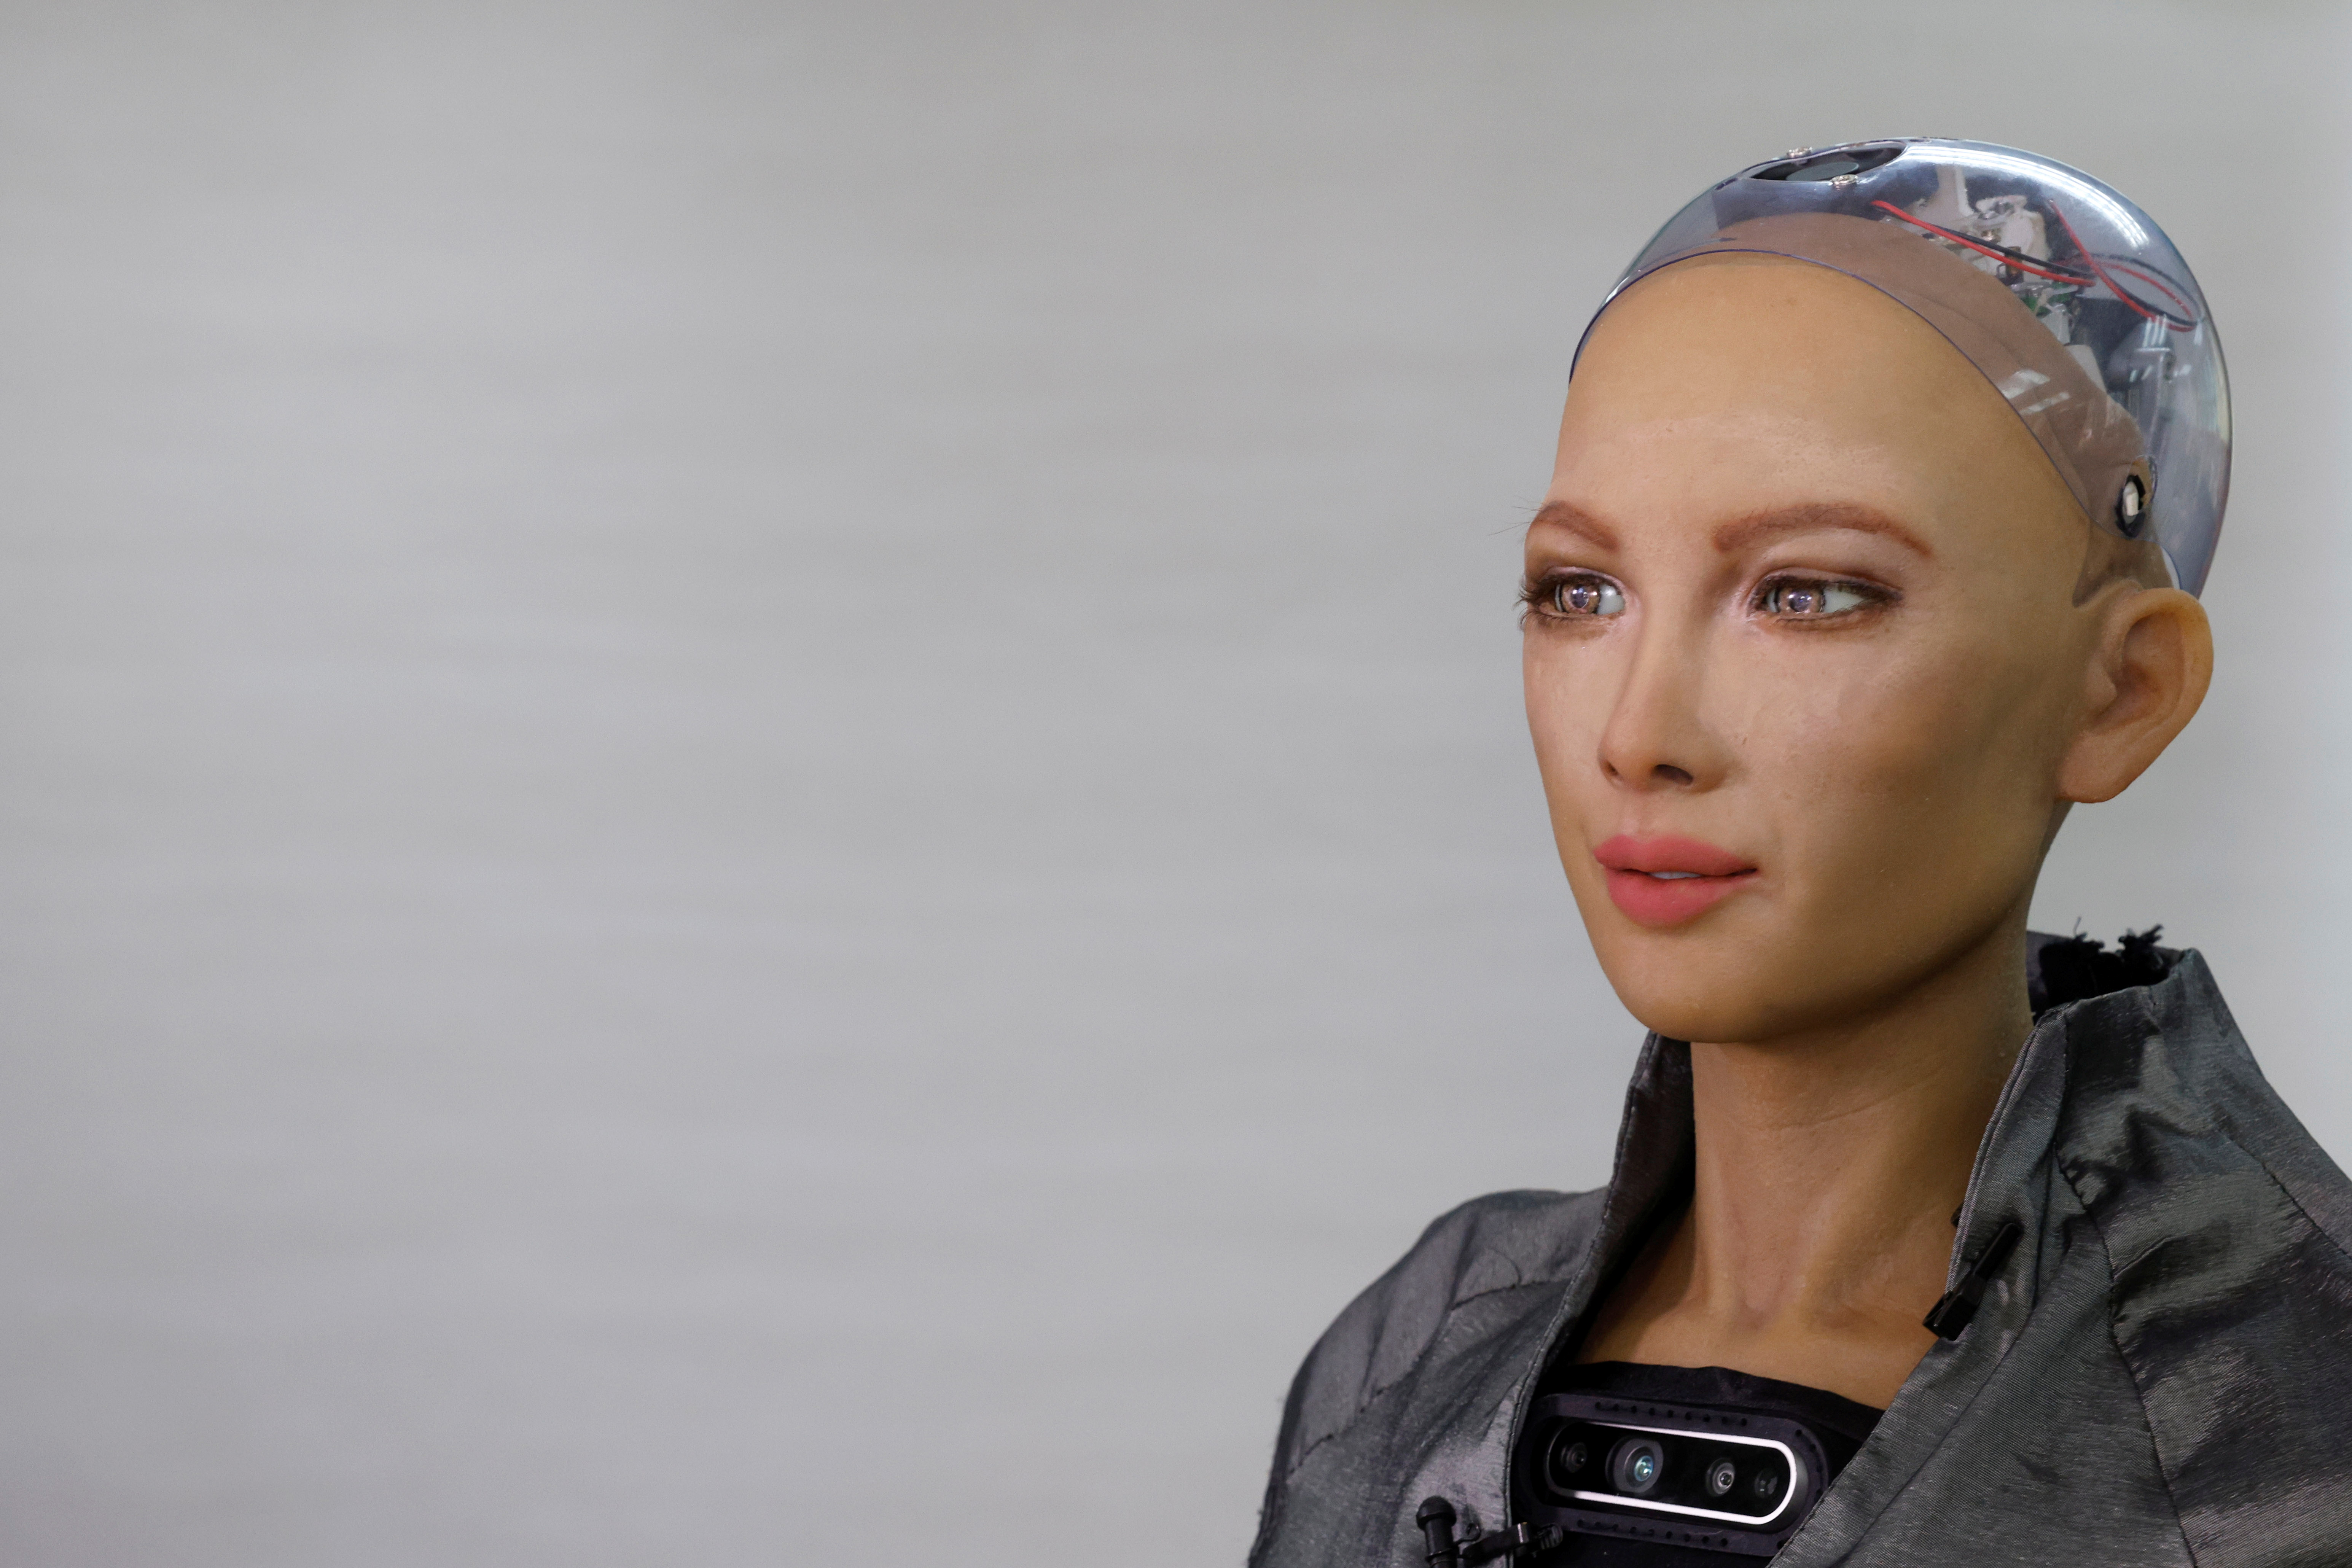 sympati Min Tilfredsstille Makers of Sophia the robot plan mass rollout amid pandemic | Reuters